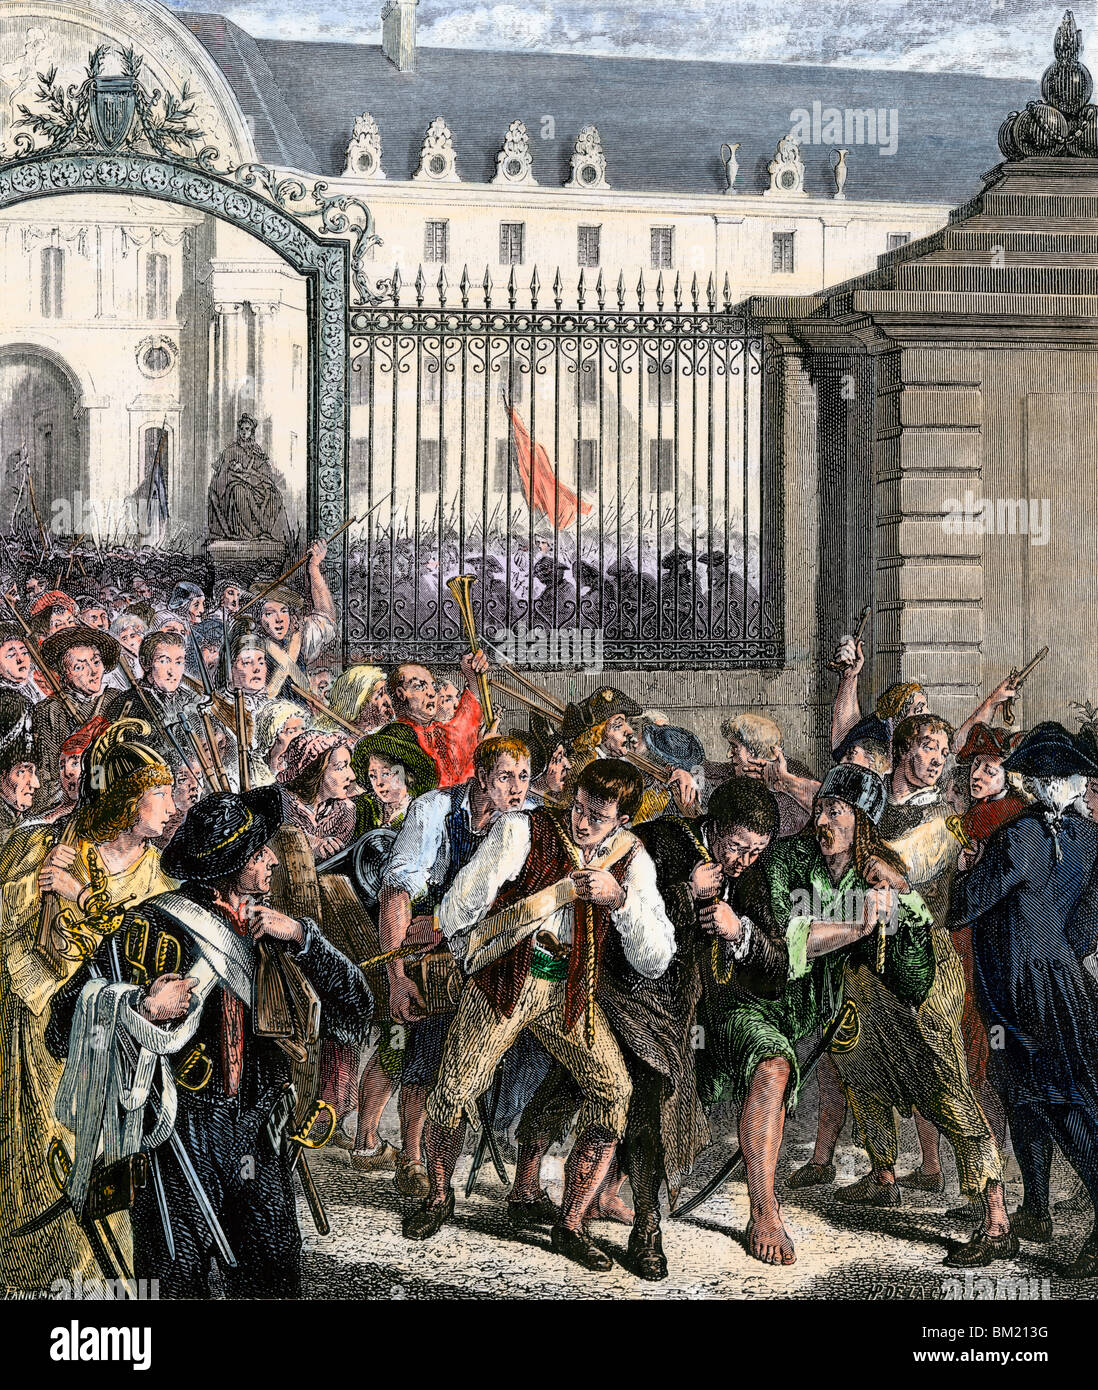 Период революции в европе. Революция во Франции 1789-1799. Великая французская революция 18 века. French Revolution 1789. Французская революция 1791.